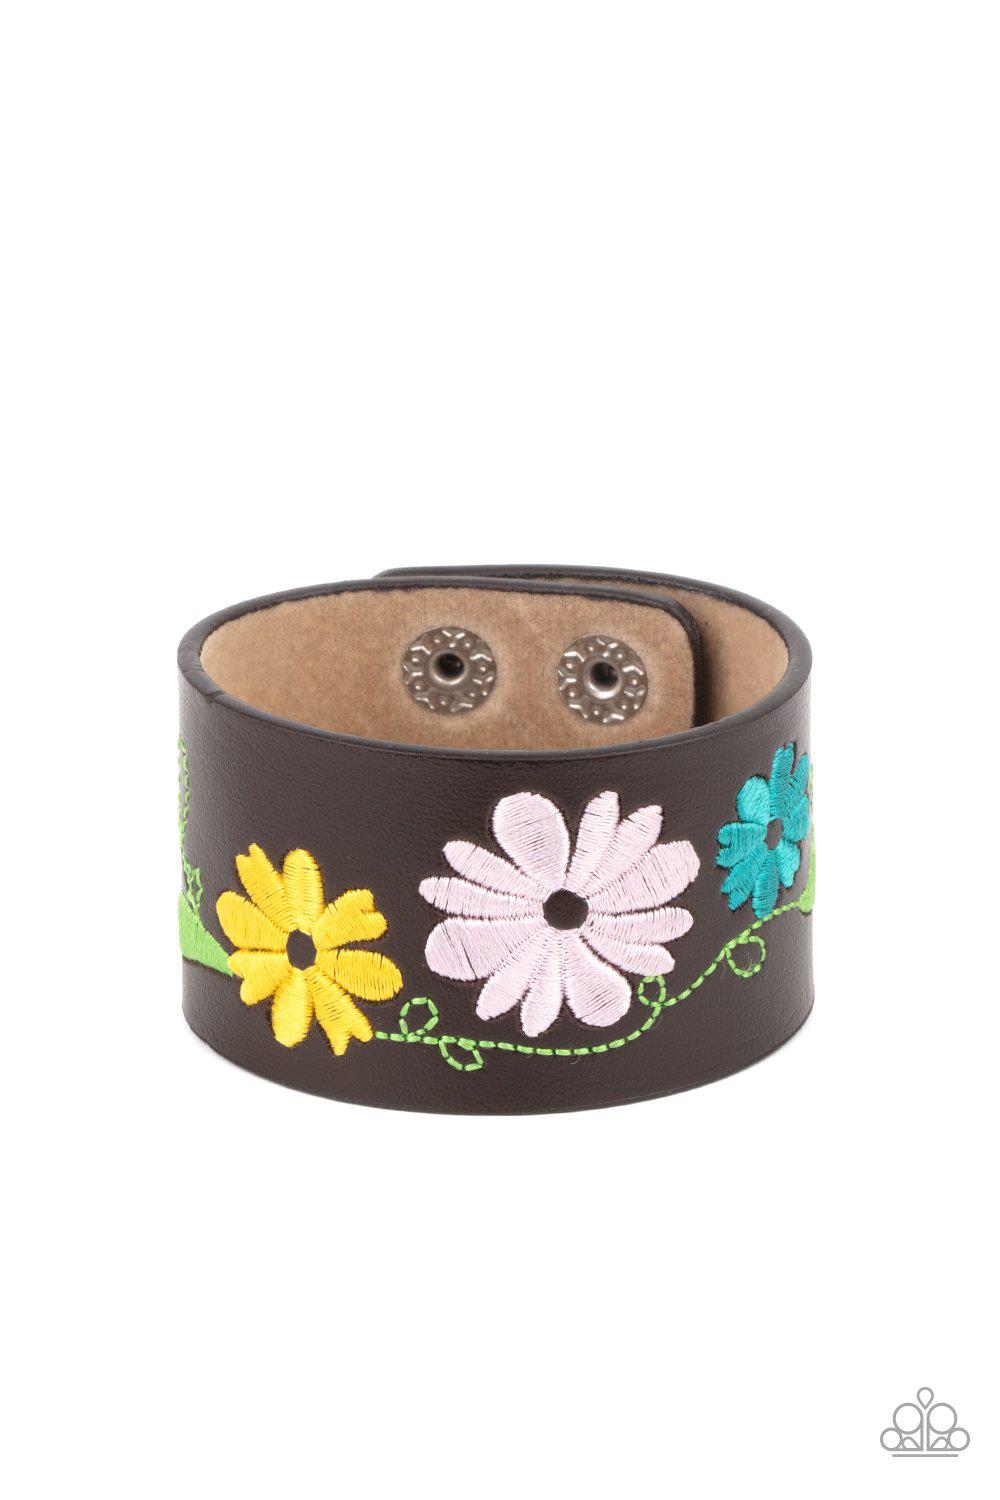 Western Eden Multi Flower Wrap Snap Bracelet - Paparazzi Accessories- lightbox - CarasShop.com - $5 Jewelry by Cara Jewels